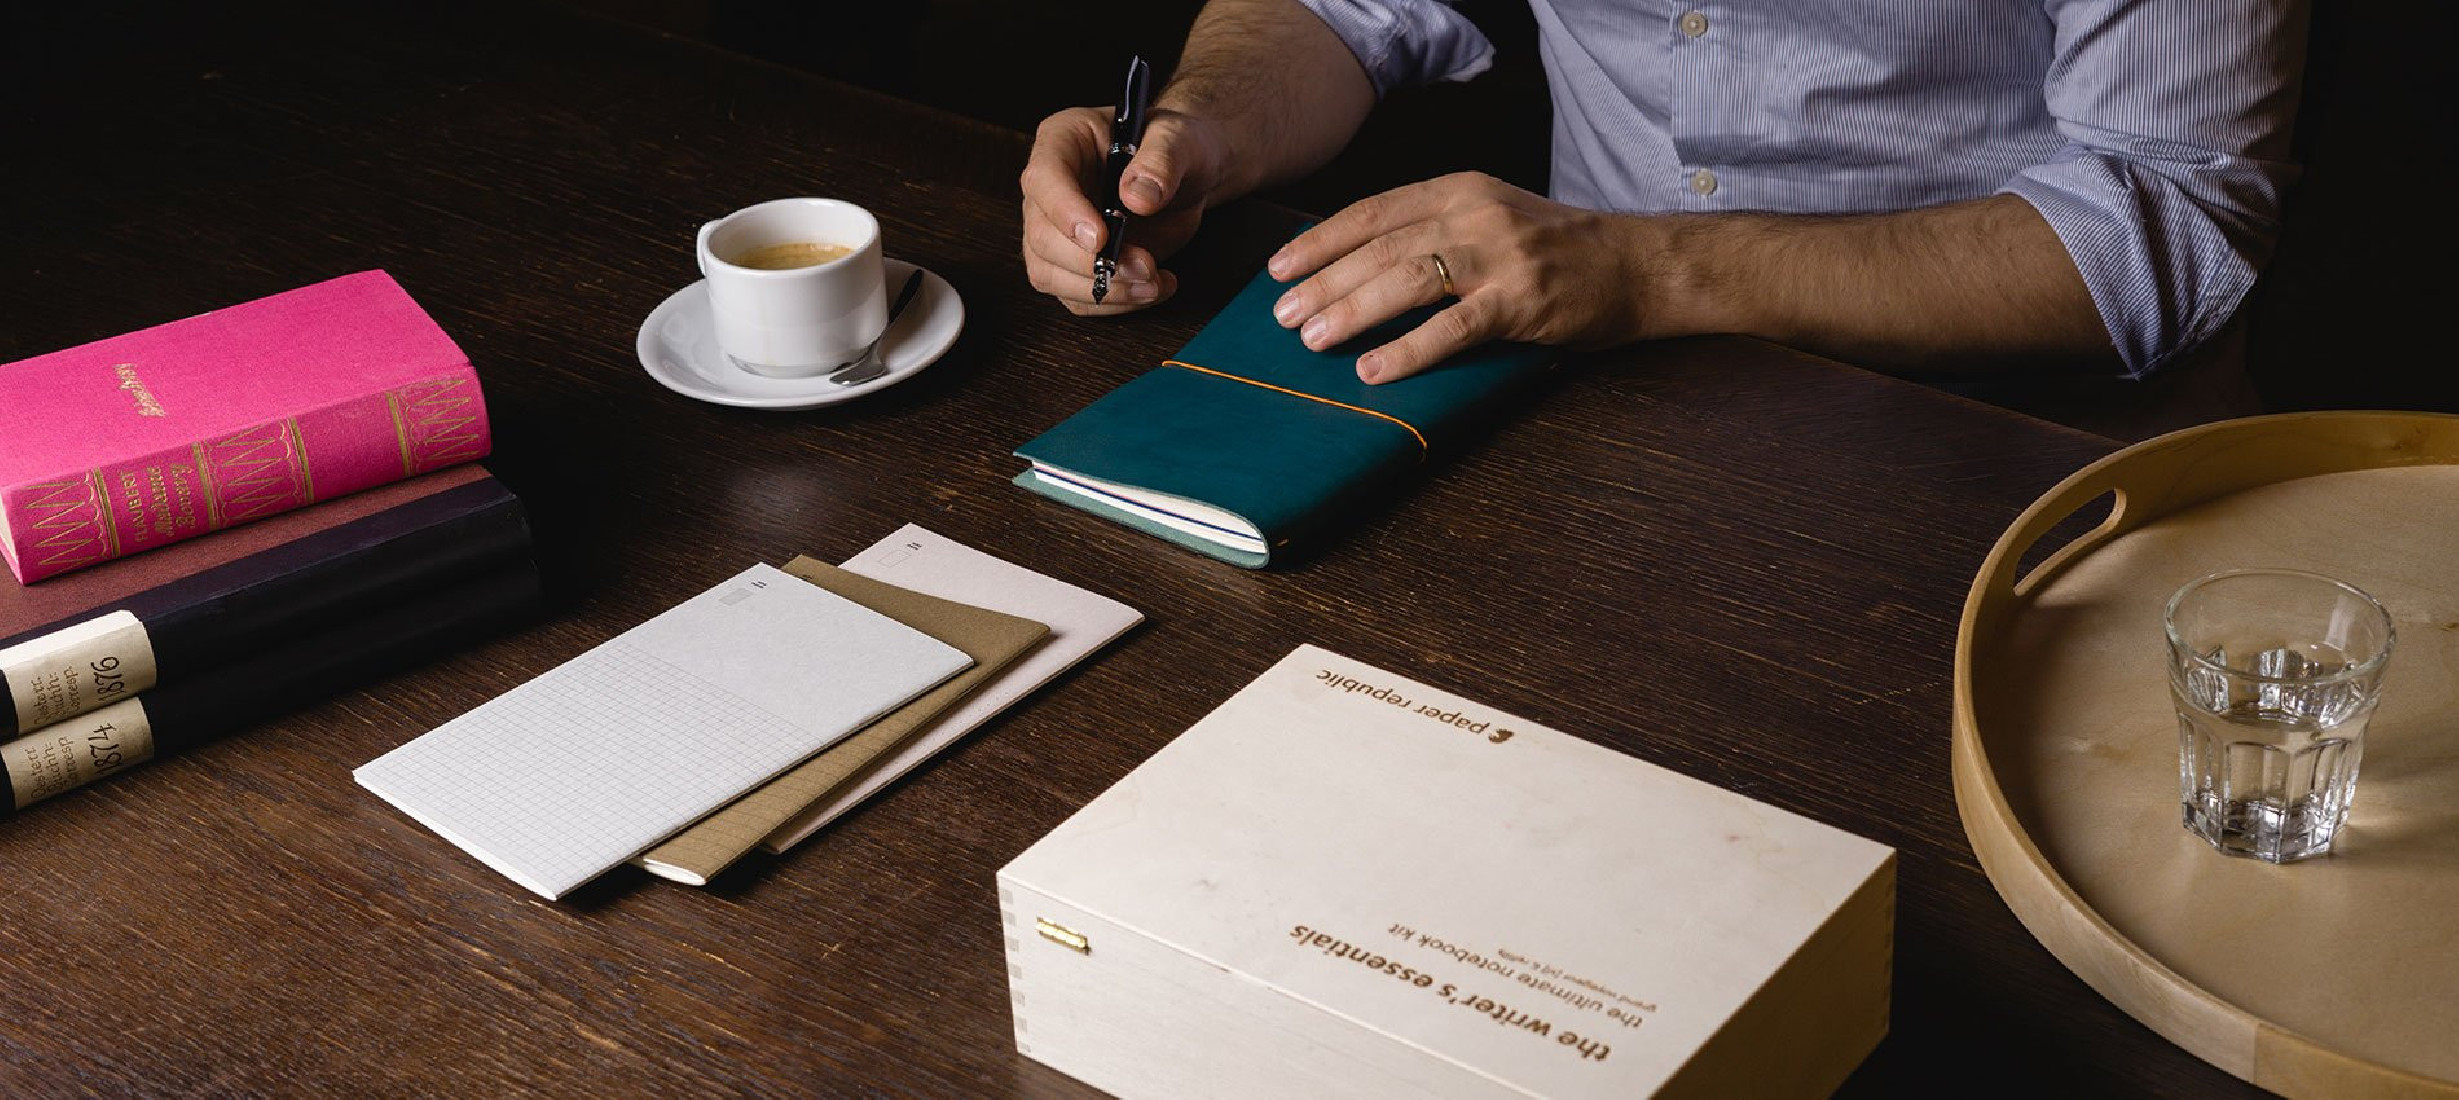 Paper Republic the writers essentials [xl] | cognac leather journal kit